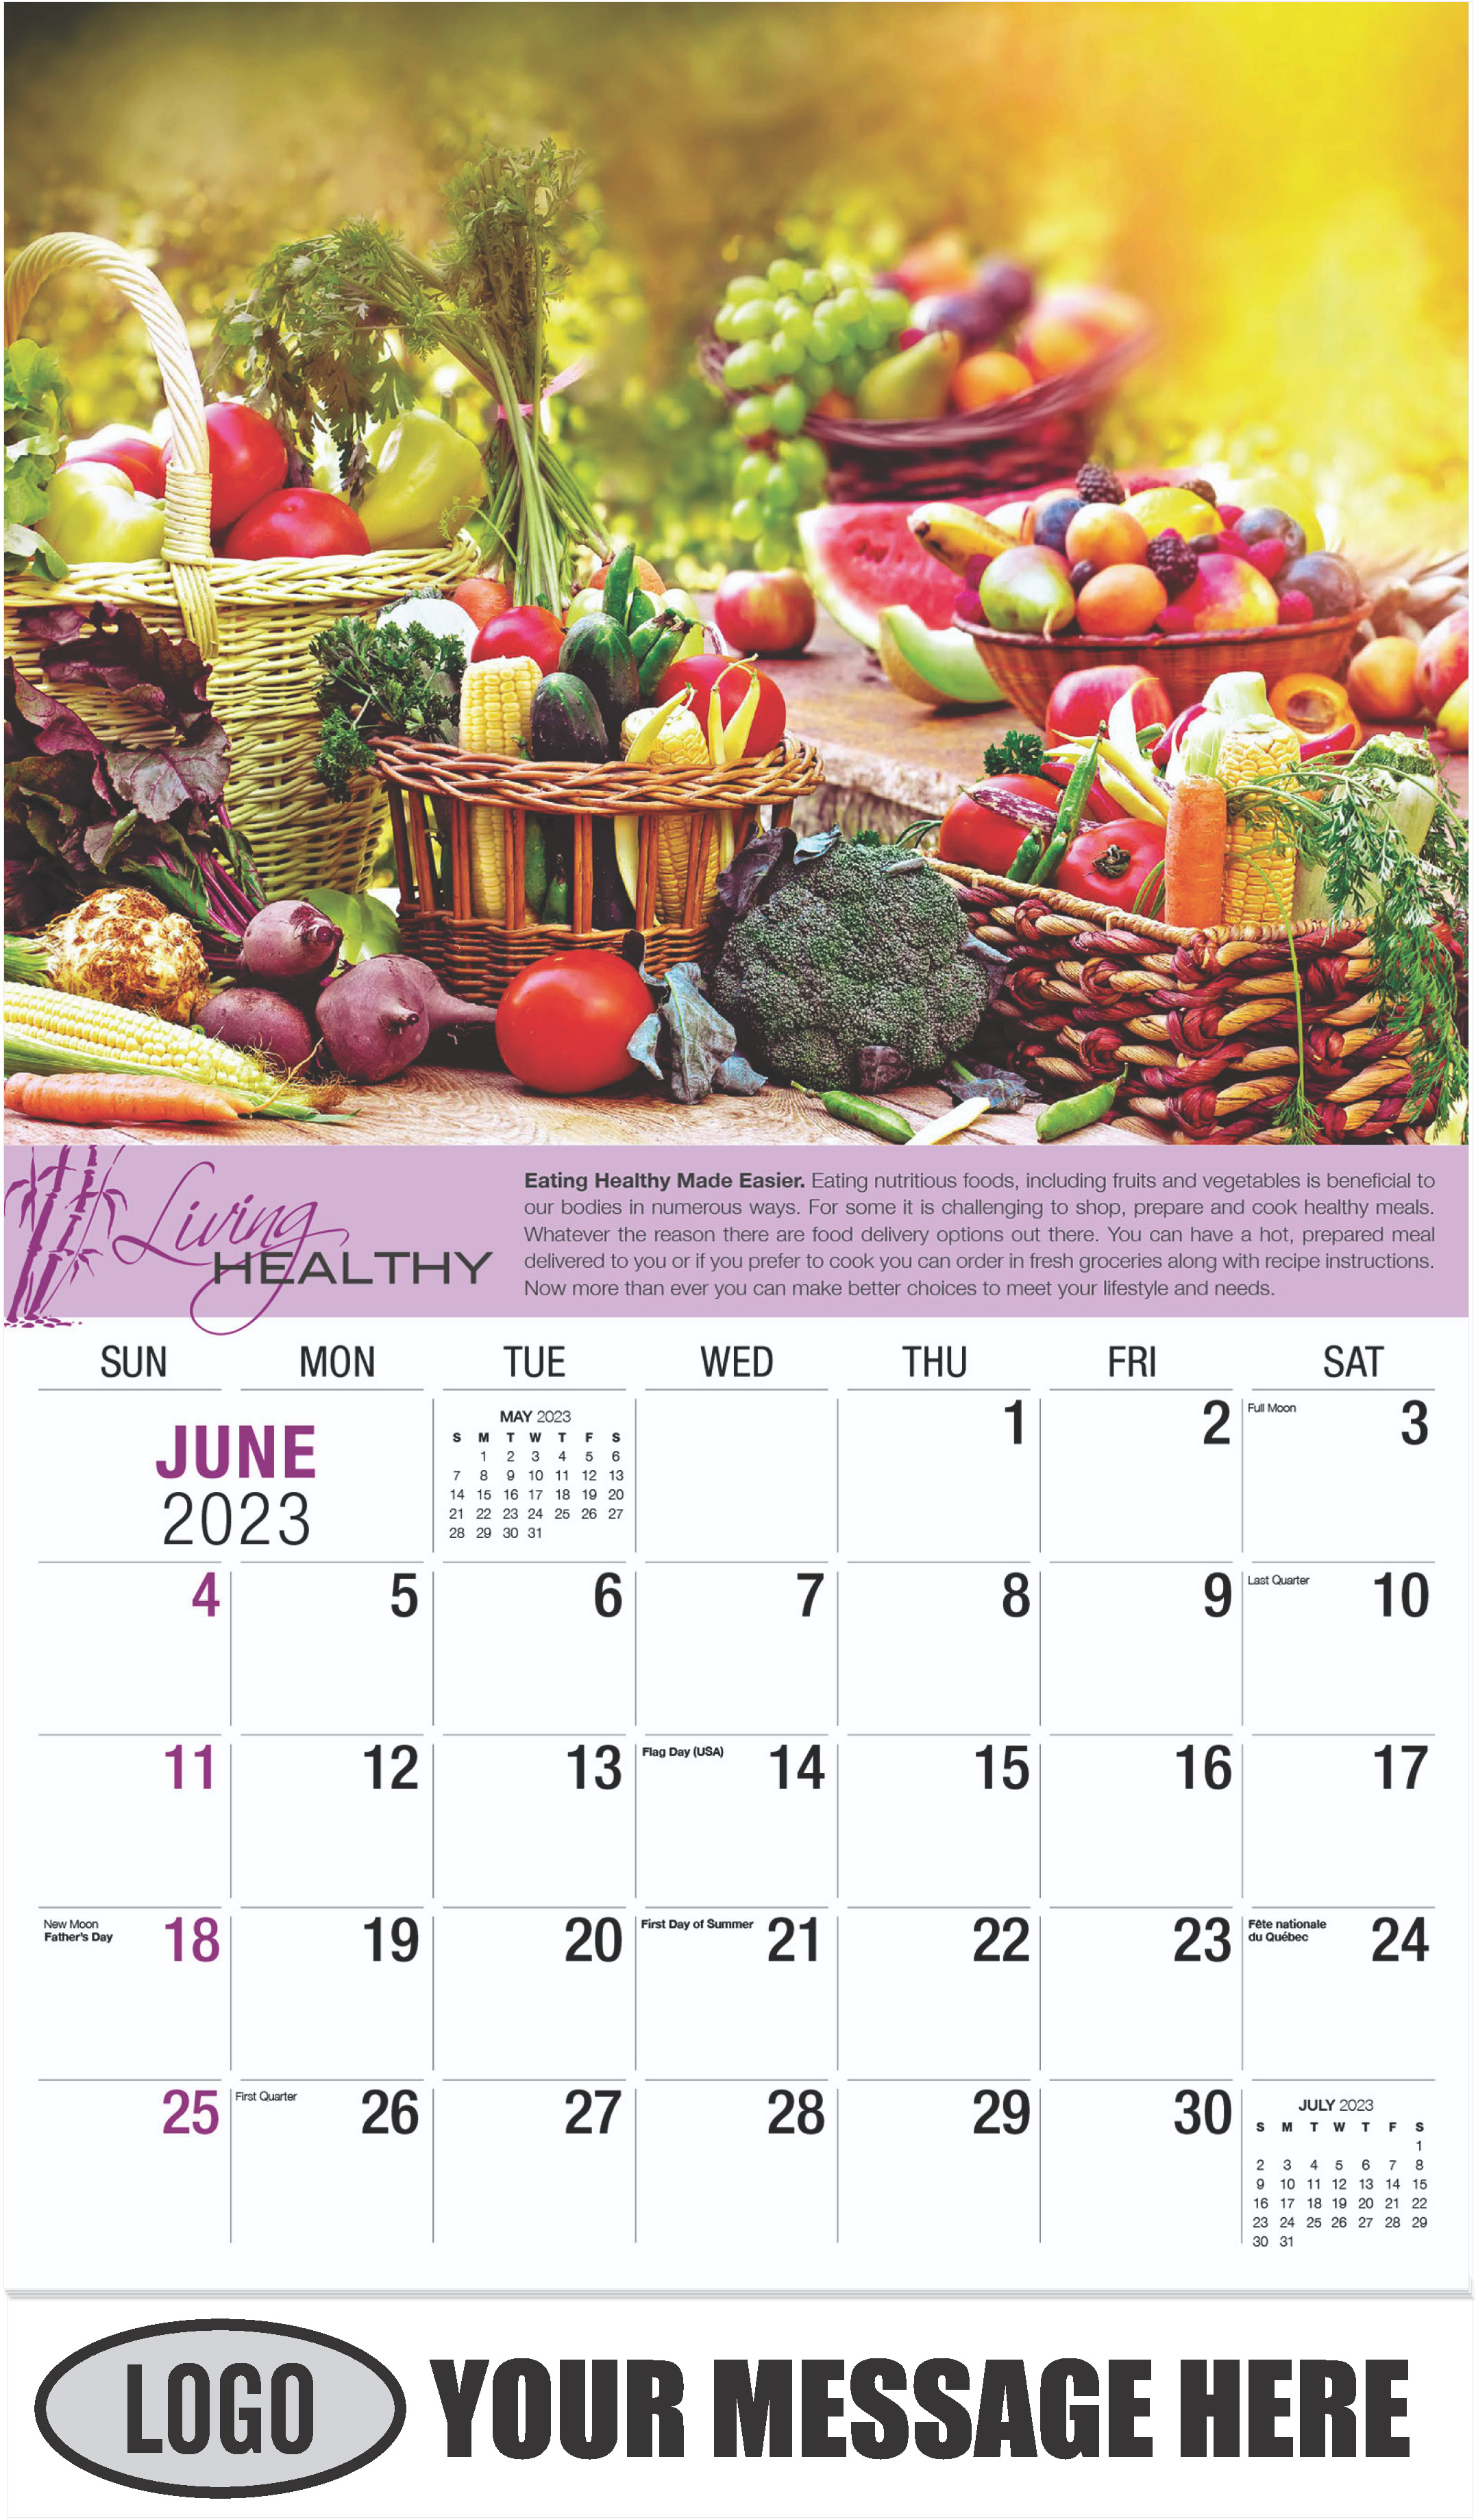 Fruits and Vegetables - June - Living Healthy 2023 Promotional Calendar